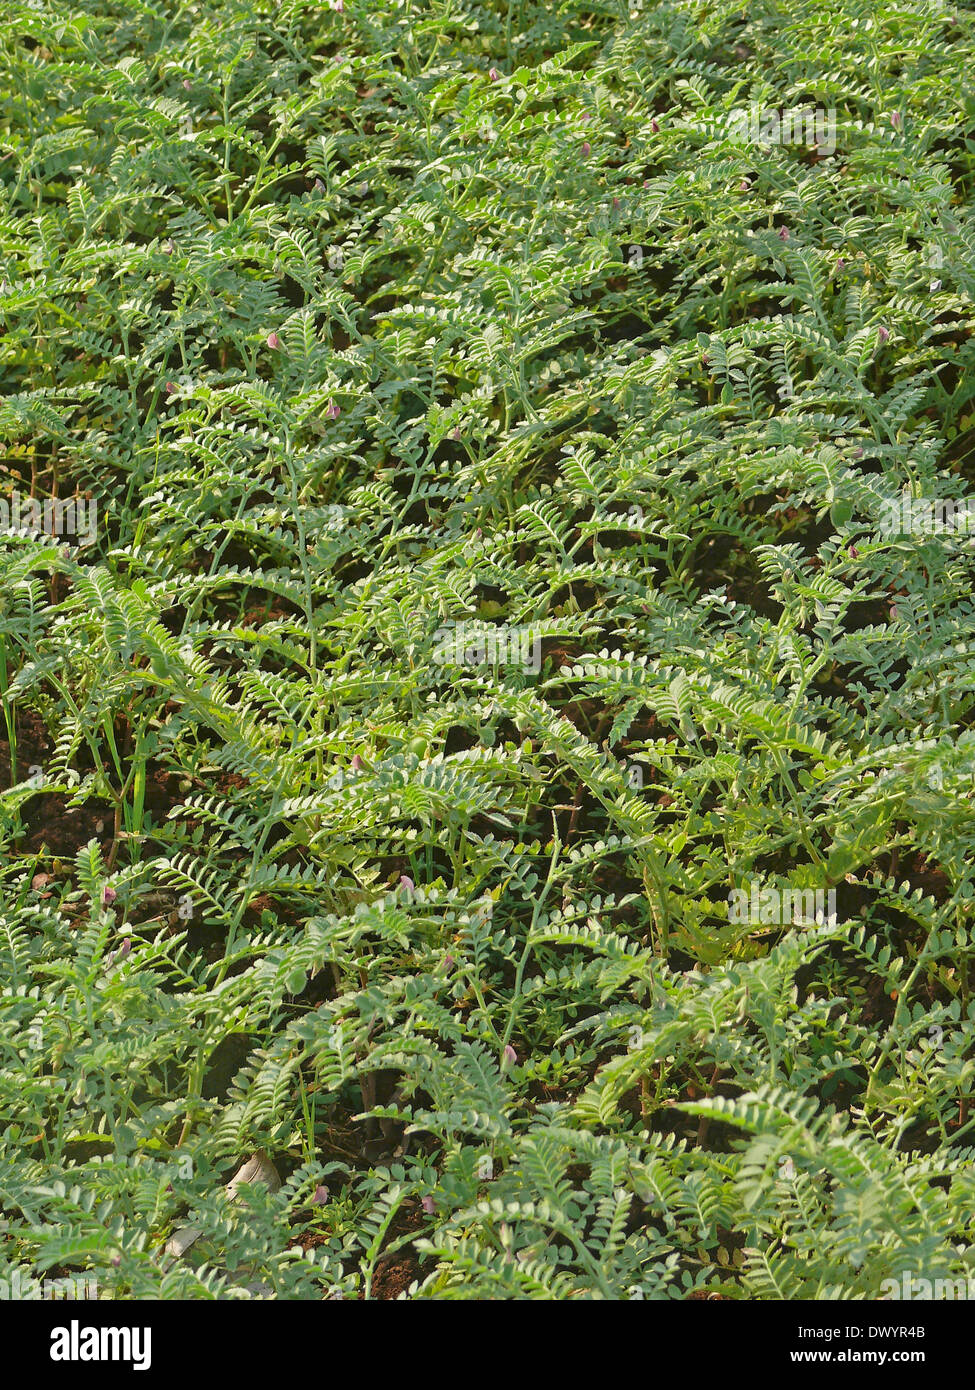 Plants of Grams, Cicer Arietinum Stock Photo